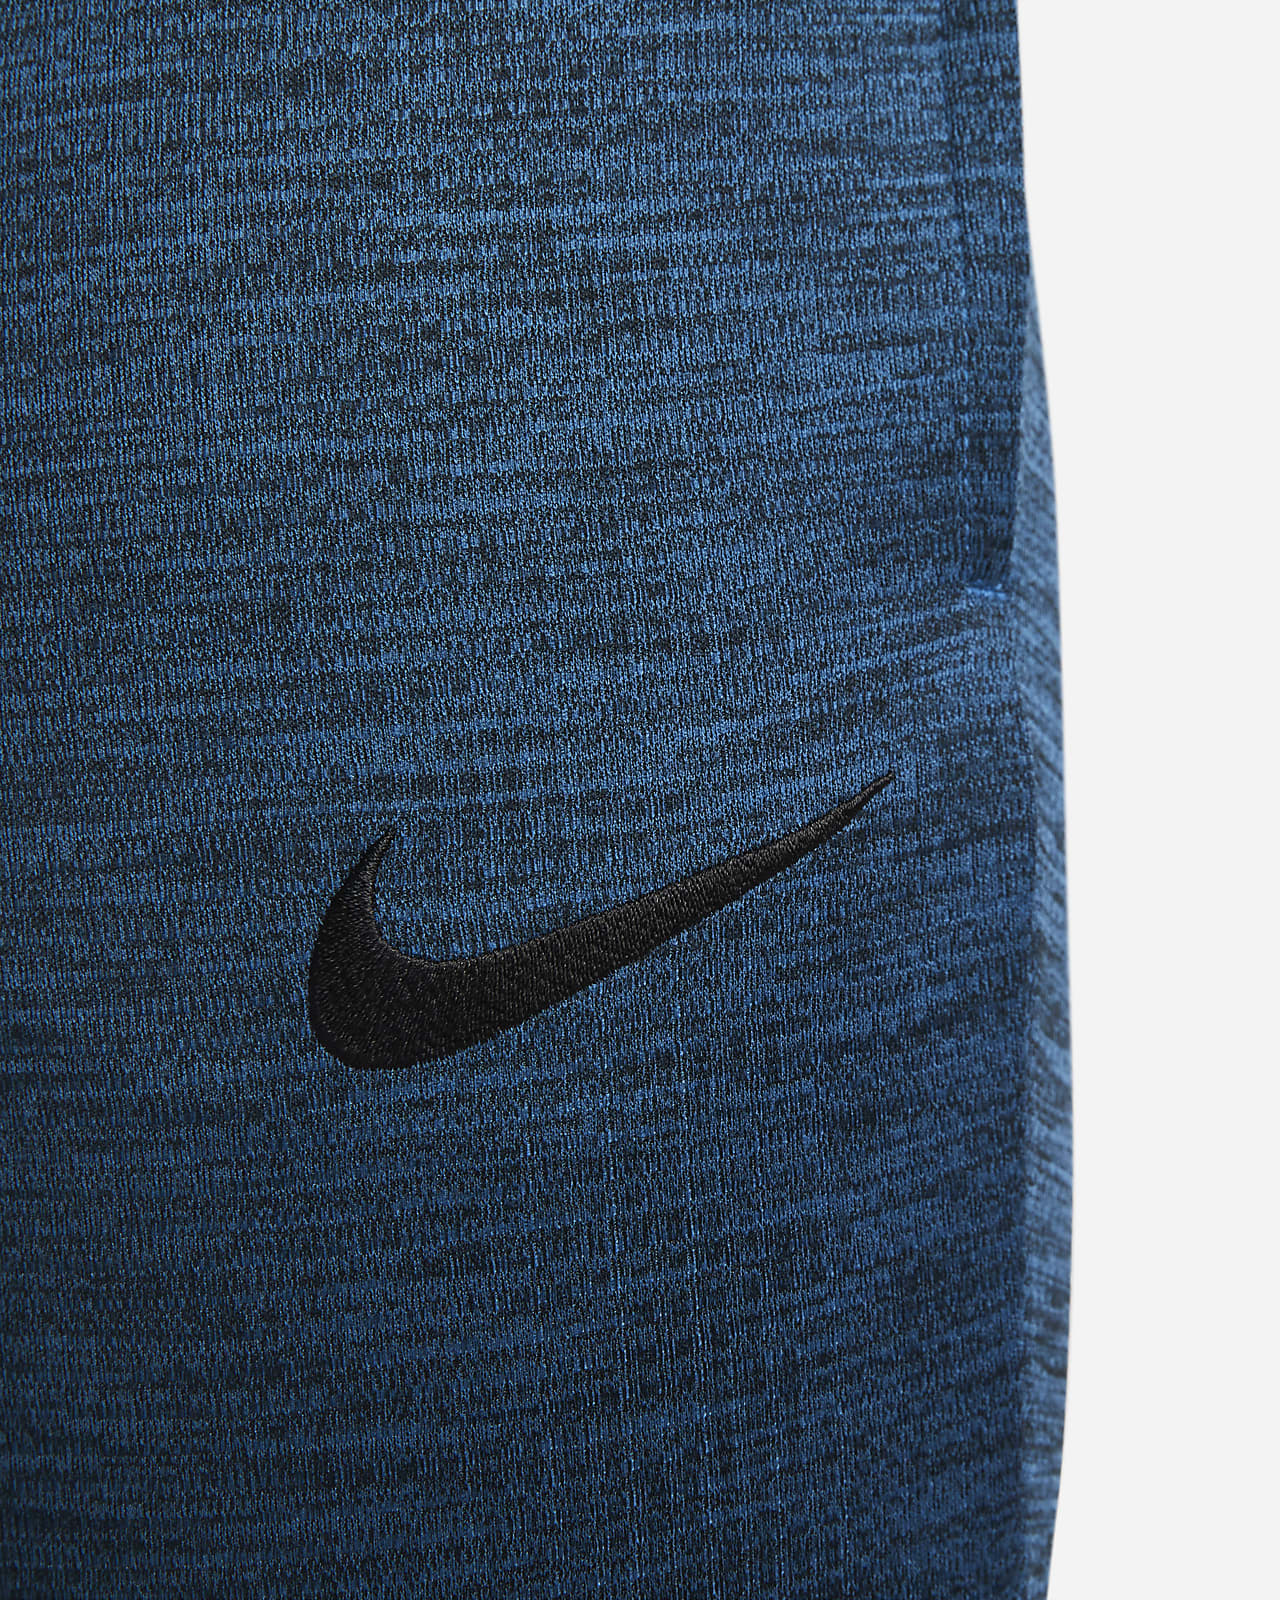 Nike Dri-FIT Academy Men's Soccer Pants - Black